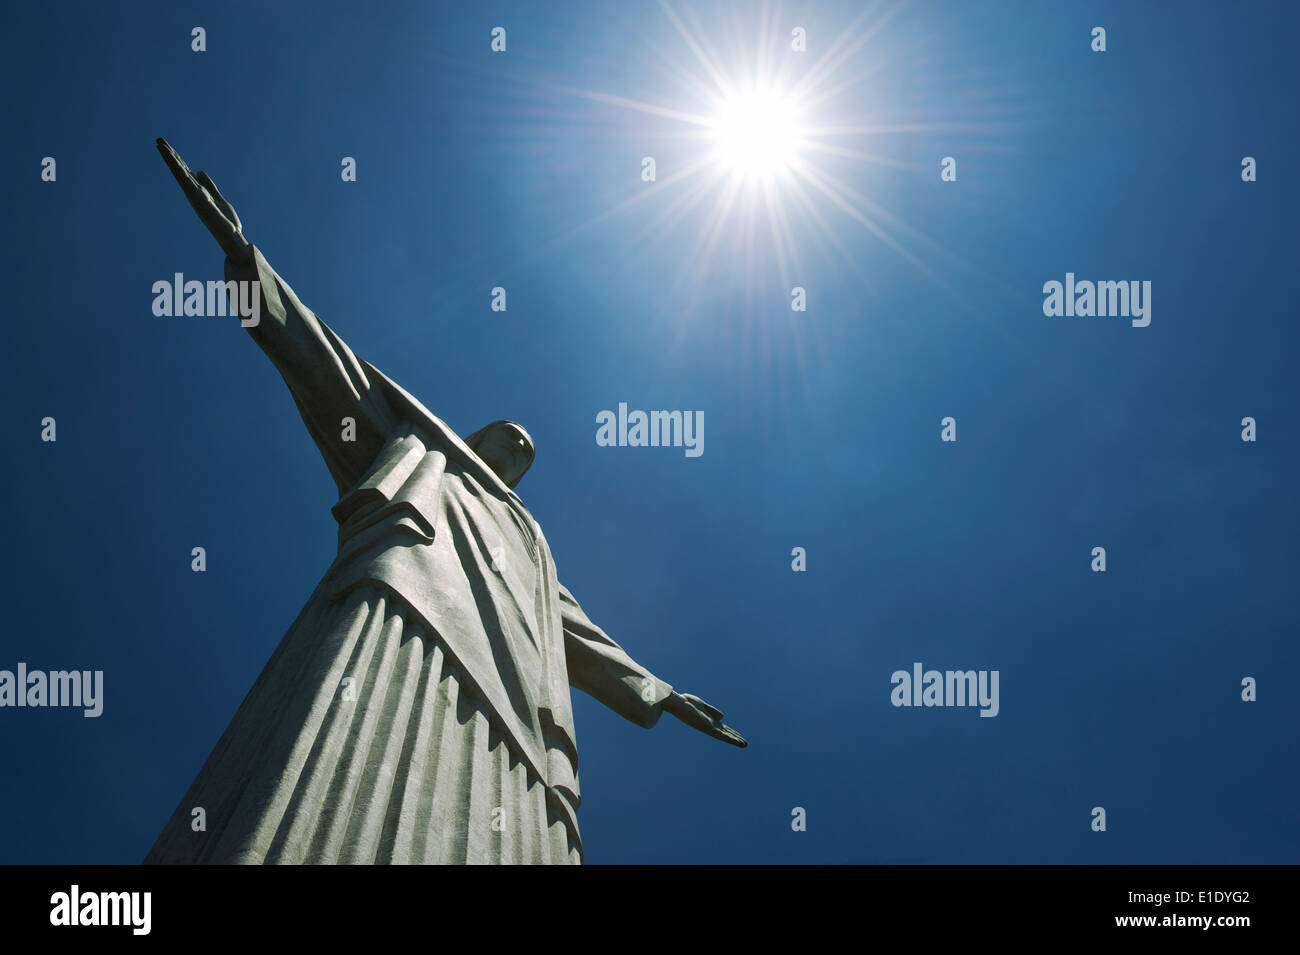 RIO DE JANEIRO, BRAZIL - OCTOBER 20, 2013: Close-up of the statue of Christ the Redeemer at Corcovado Mountain under sun. Stock Photo